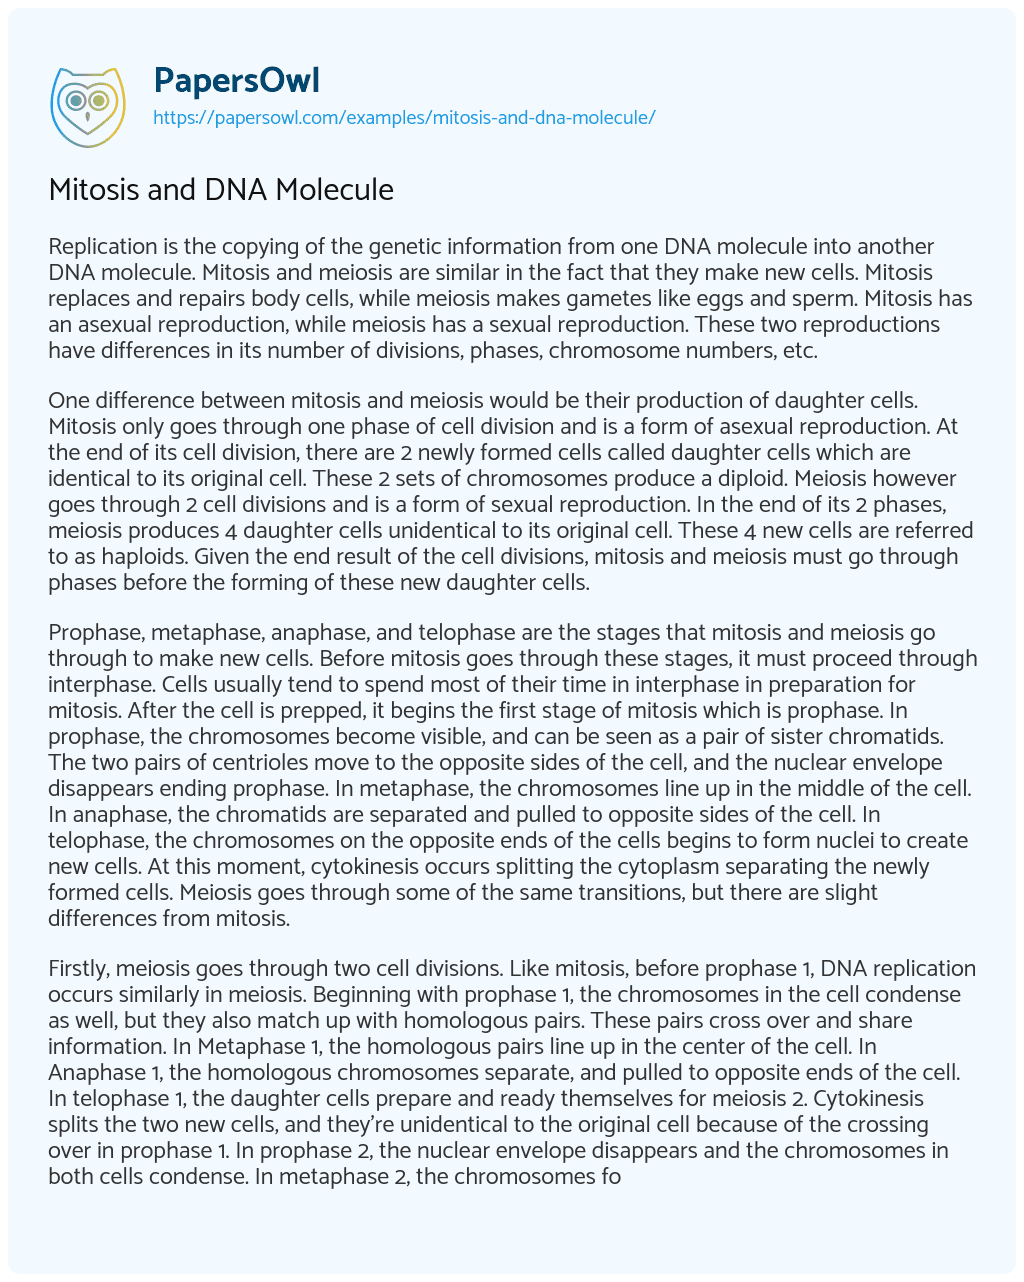 Essay on Mitosis and DNA Molecule